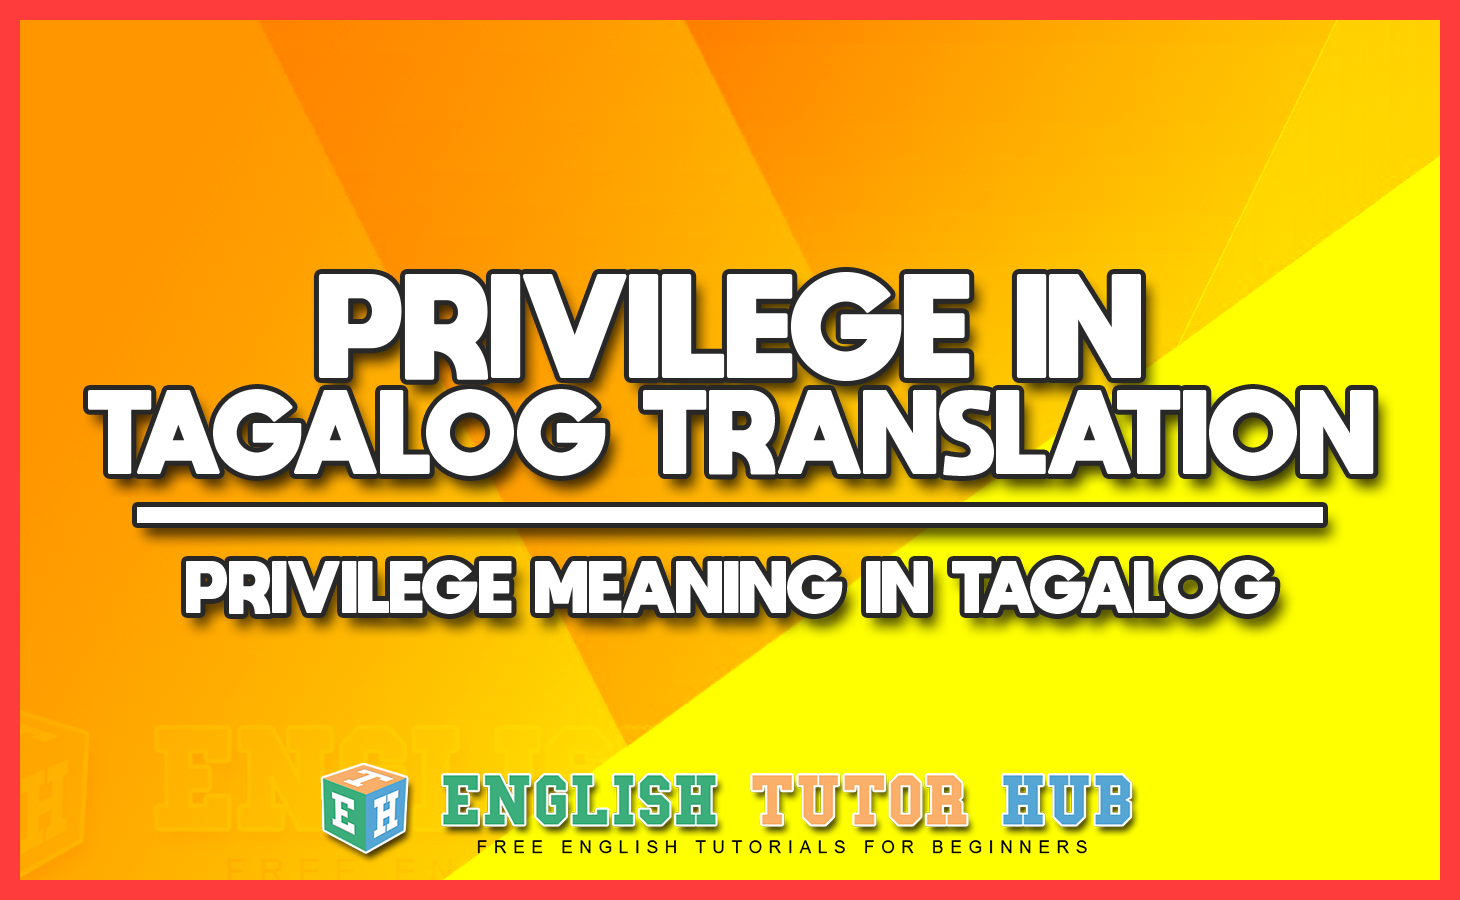 PRIVILEGE IN TAGALOG TRANSLATION